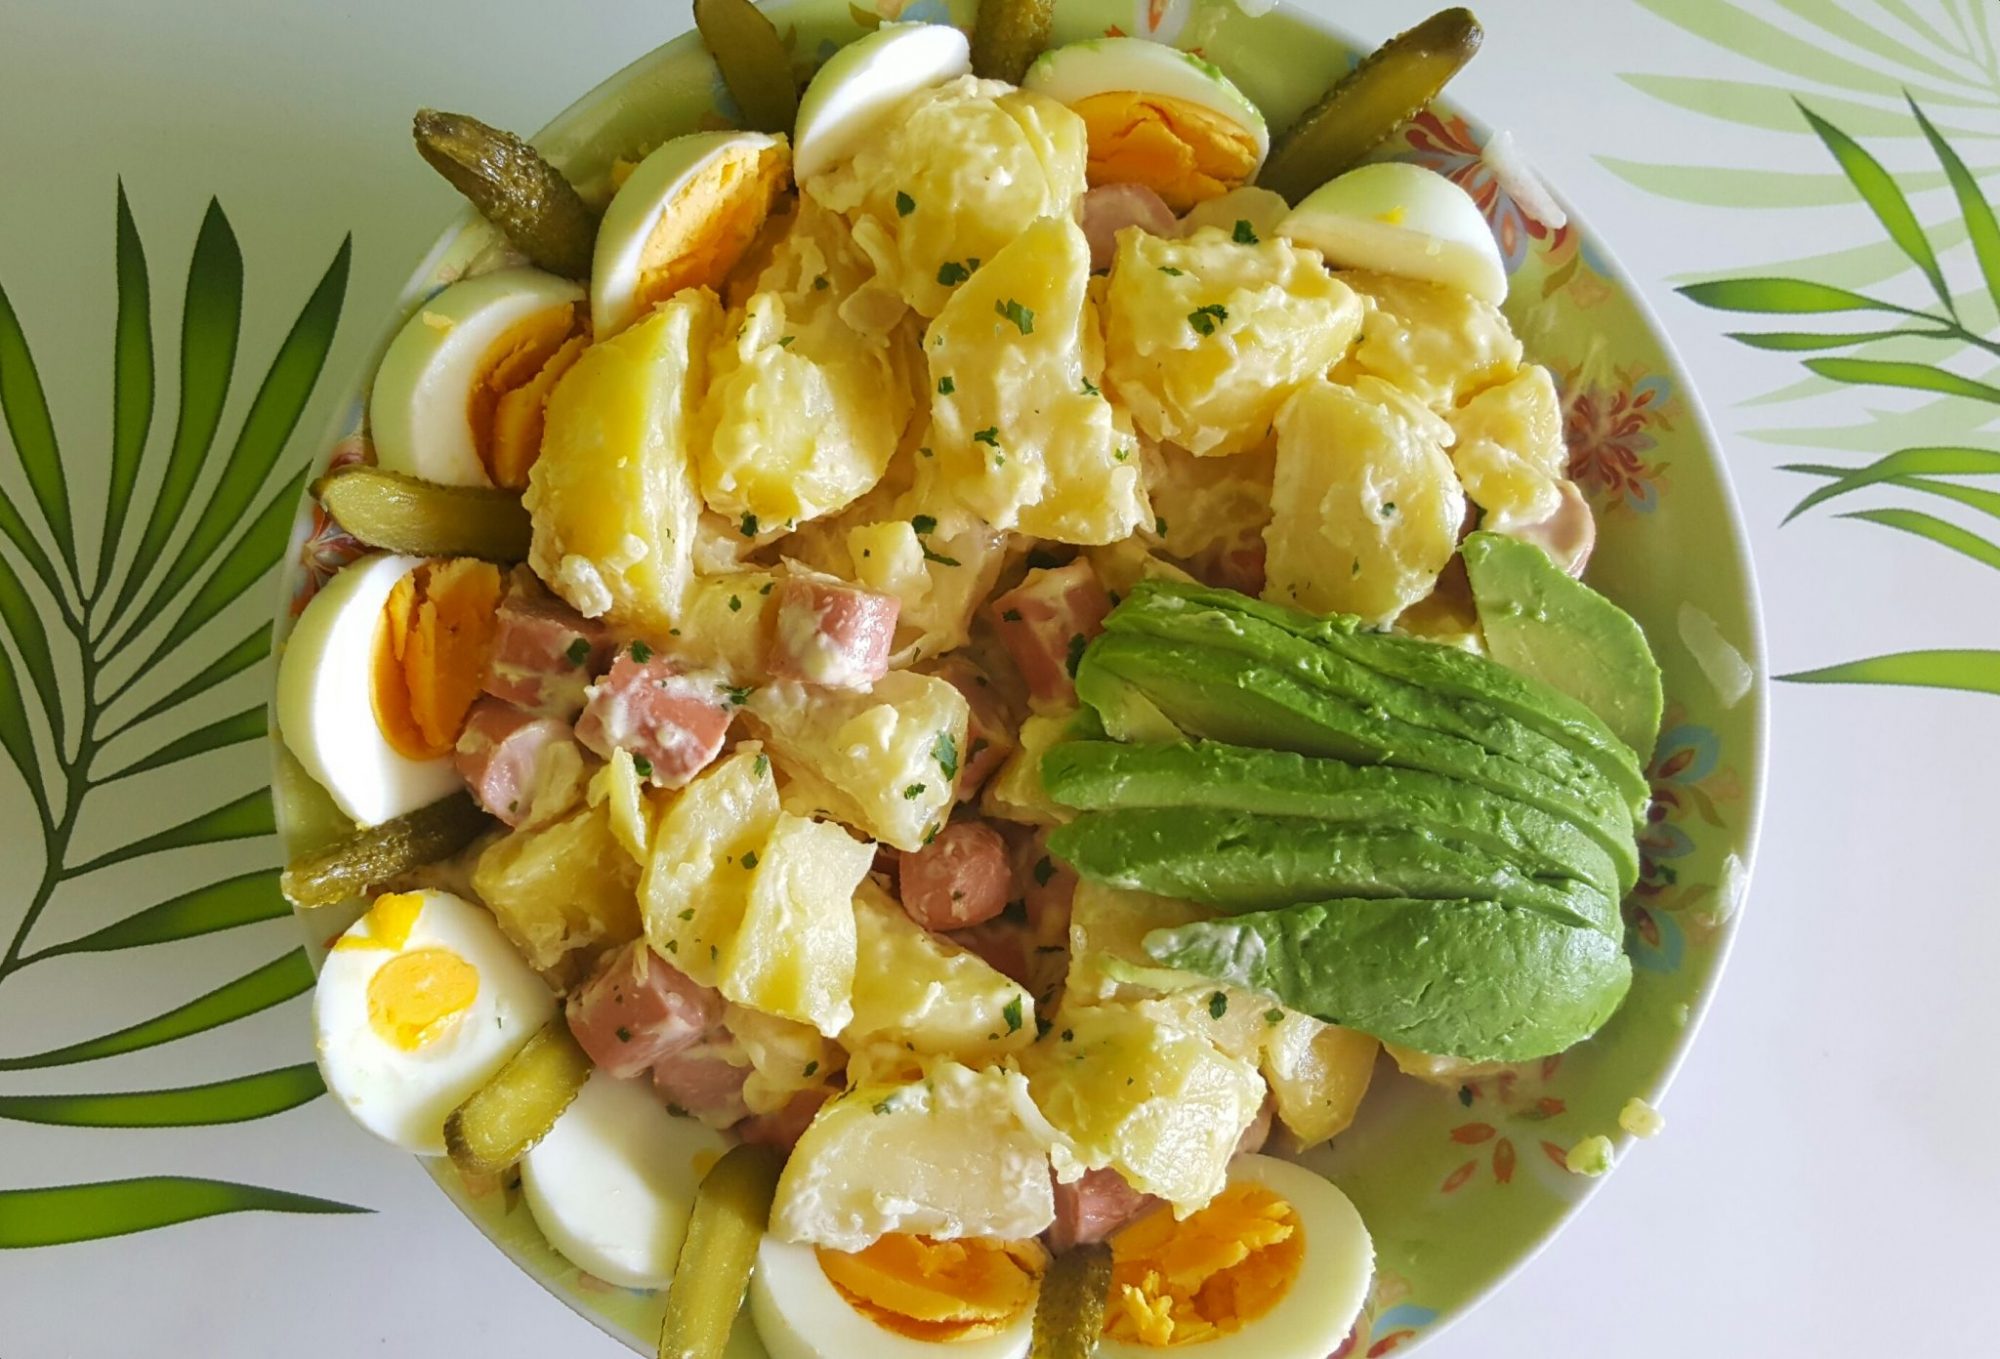 Potato salad with sausages